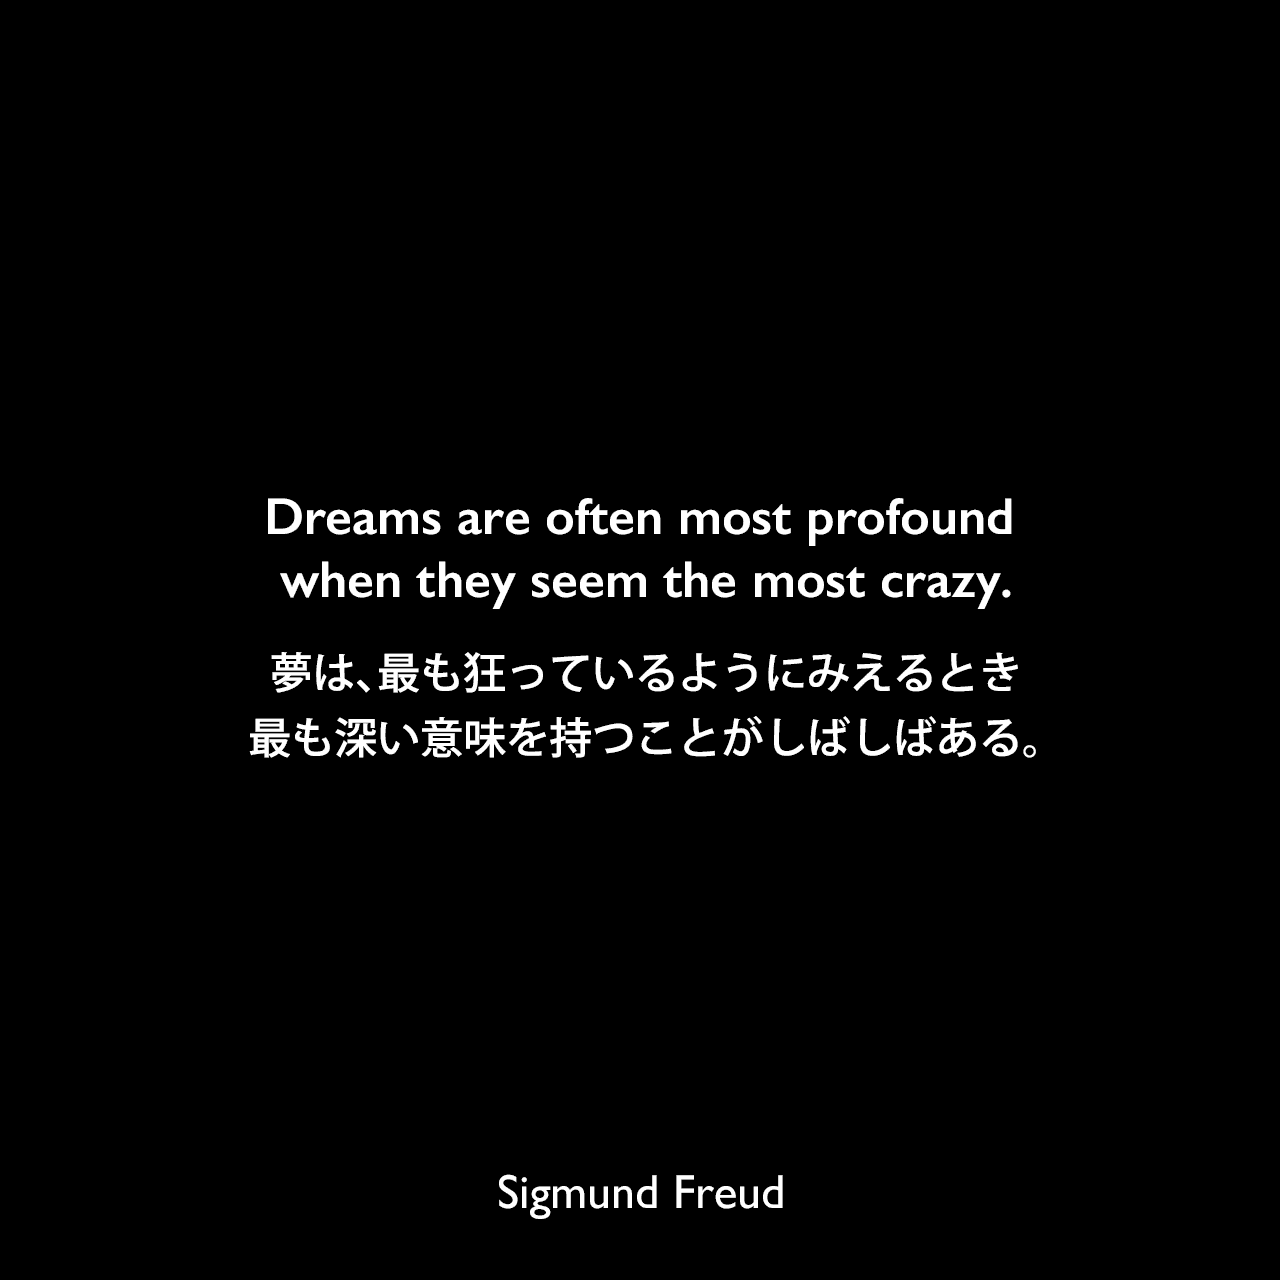 Dreams are often most profound when they seem the most crazy.夢は、最も狂っているようにみえるとき、最も深い意味を持つことがしばしばある。Sigmund Freud